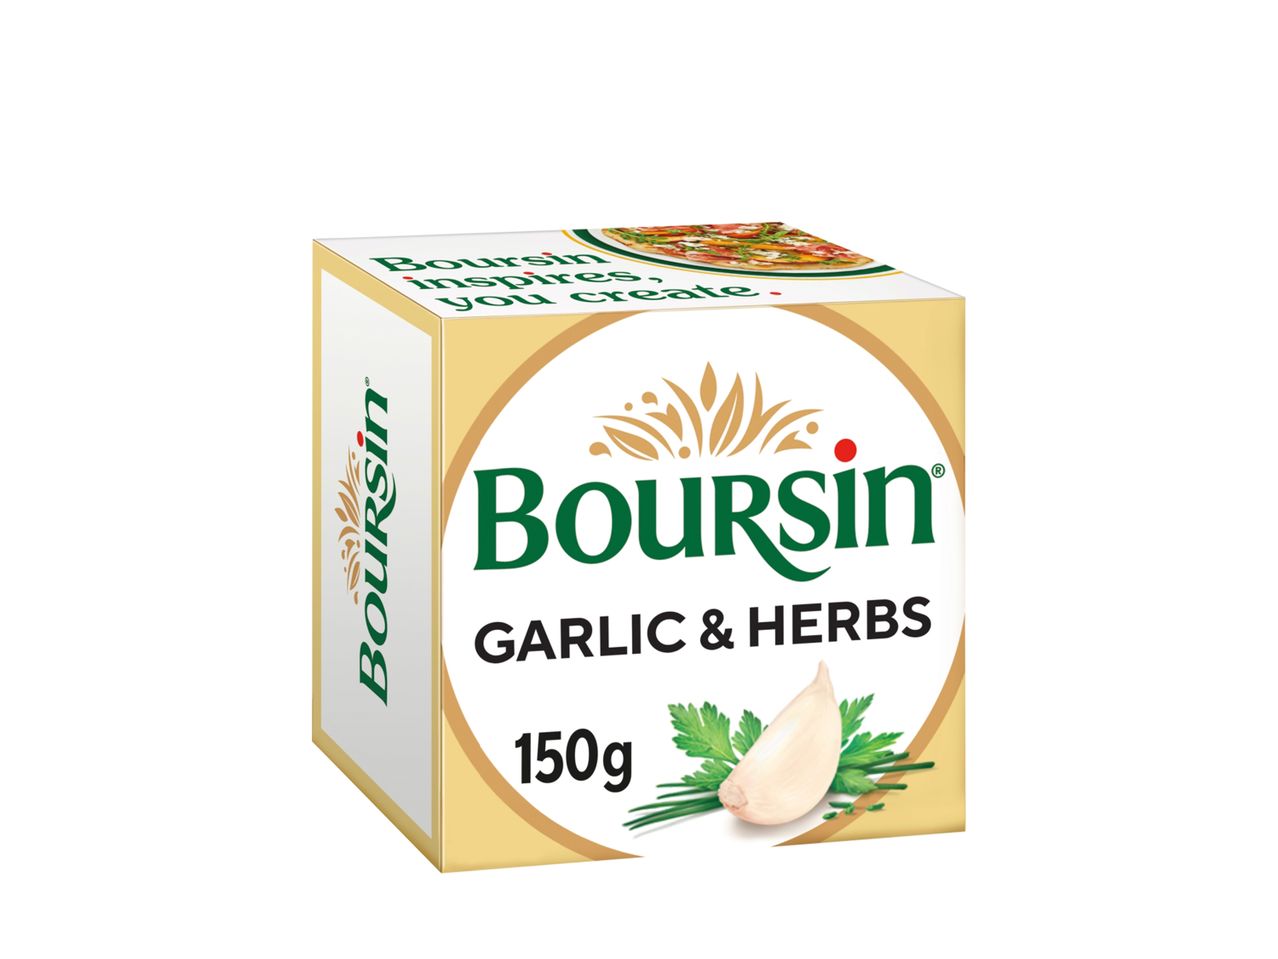 Go to full screen view: Boursin Garlic & Herb - Image 1